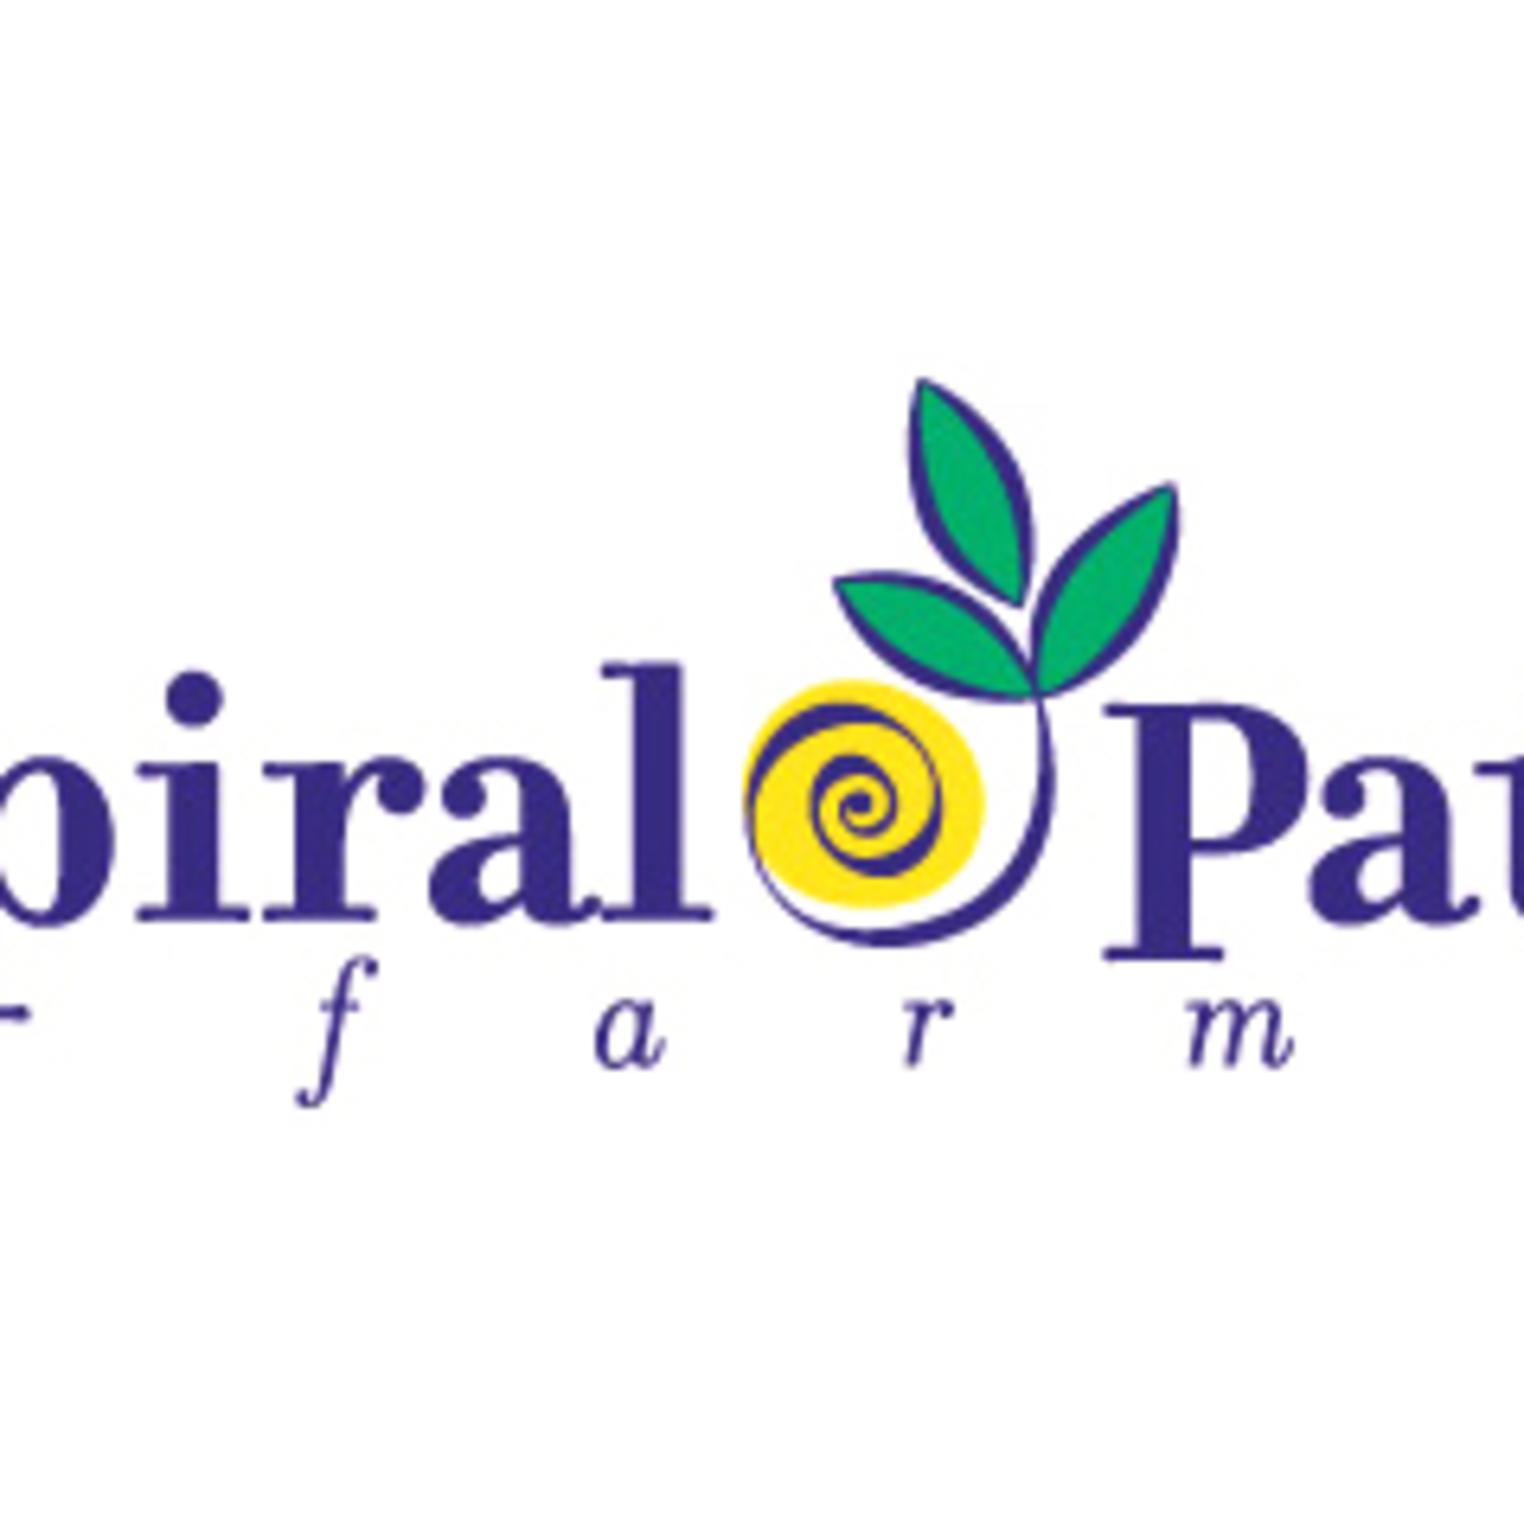 Spiral Path Farm LLC